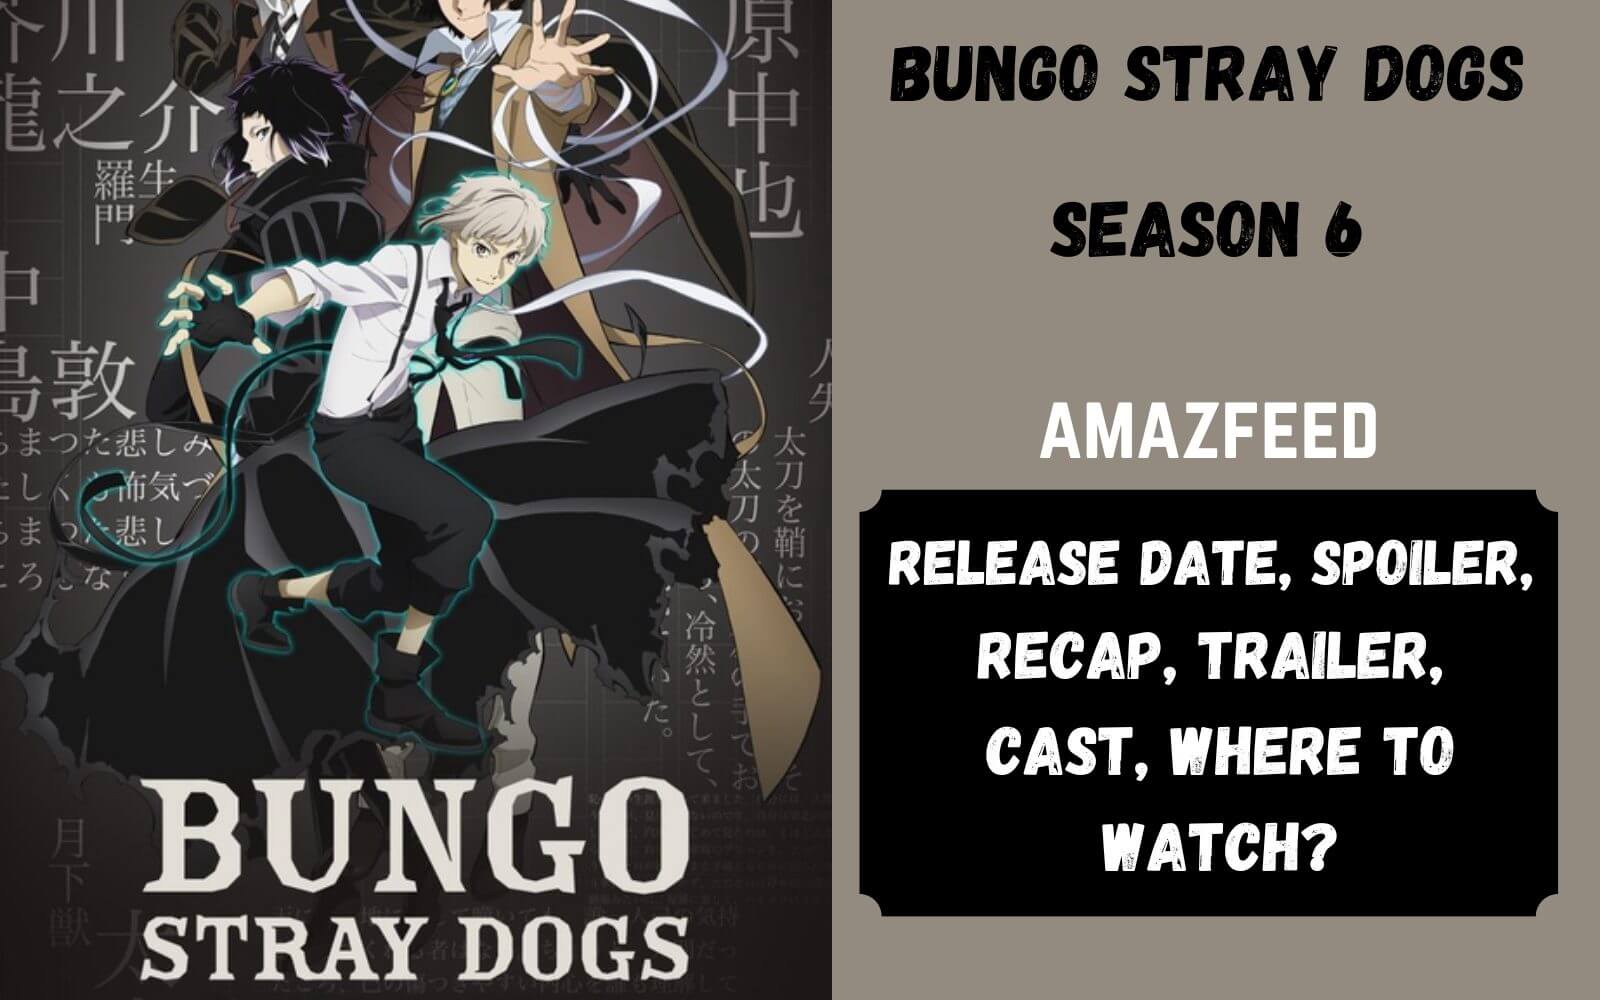 Will 'Bungo Stray Dogs' Return for Season 6?